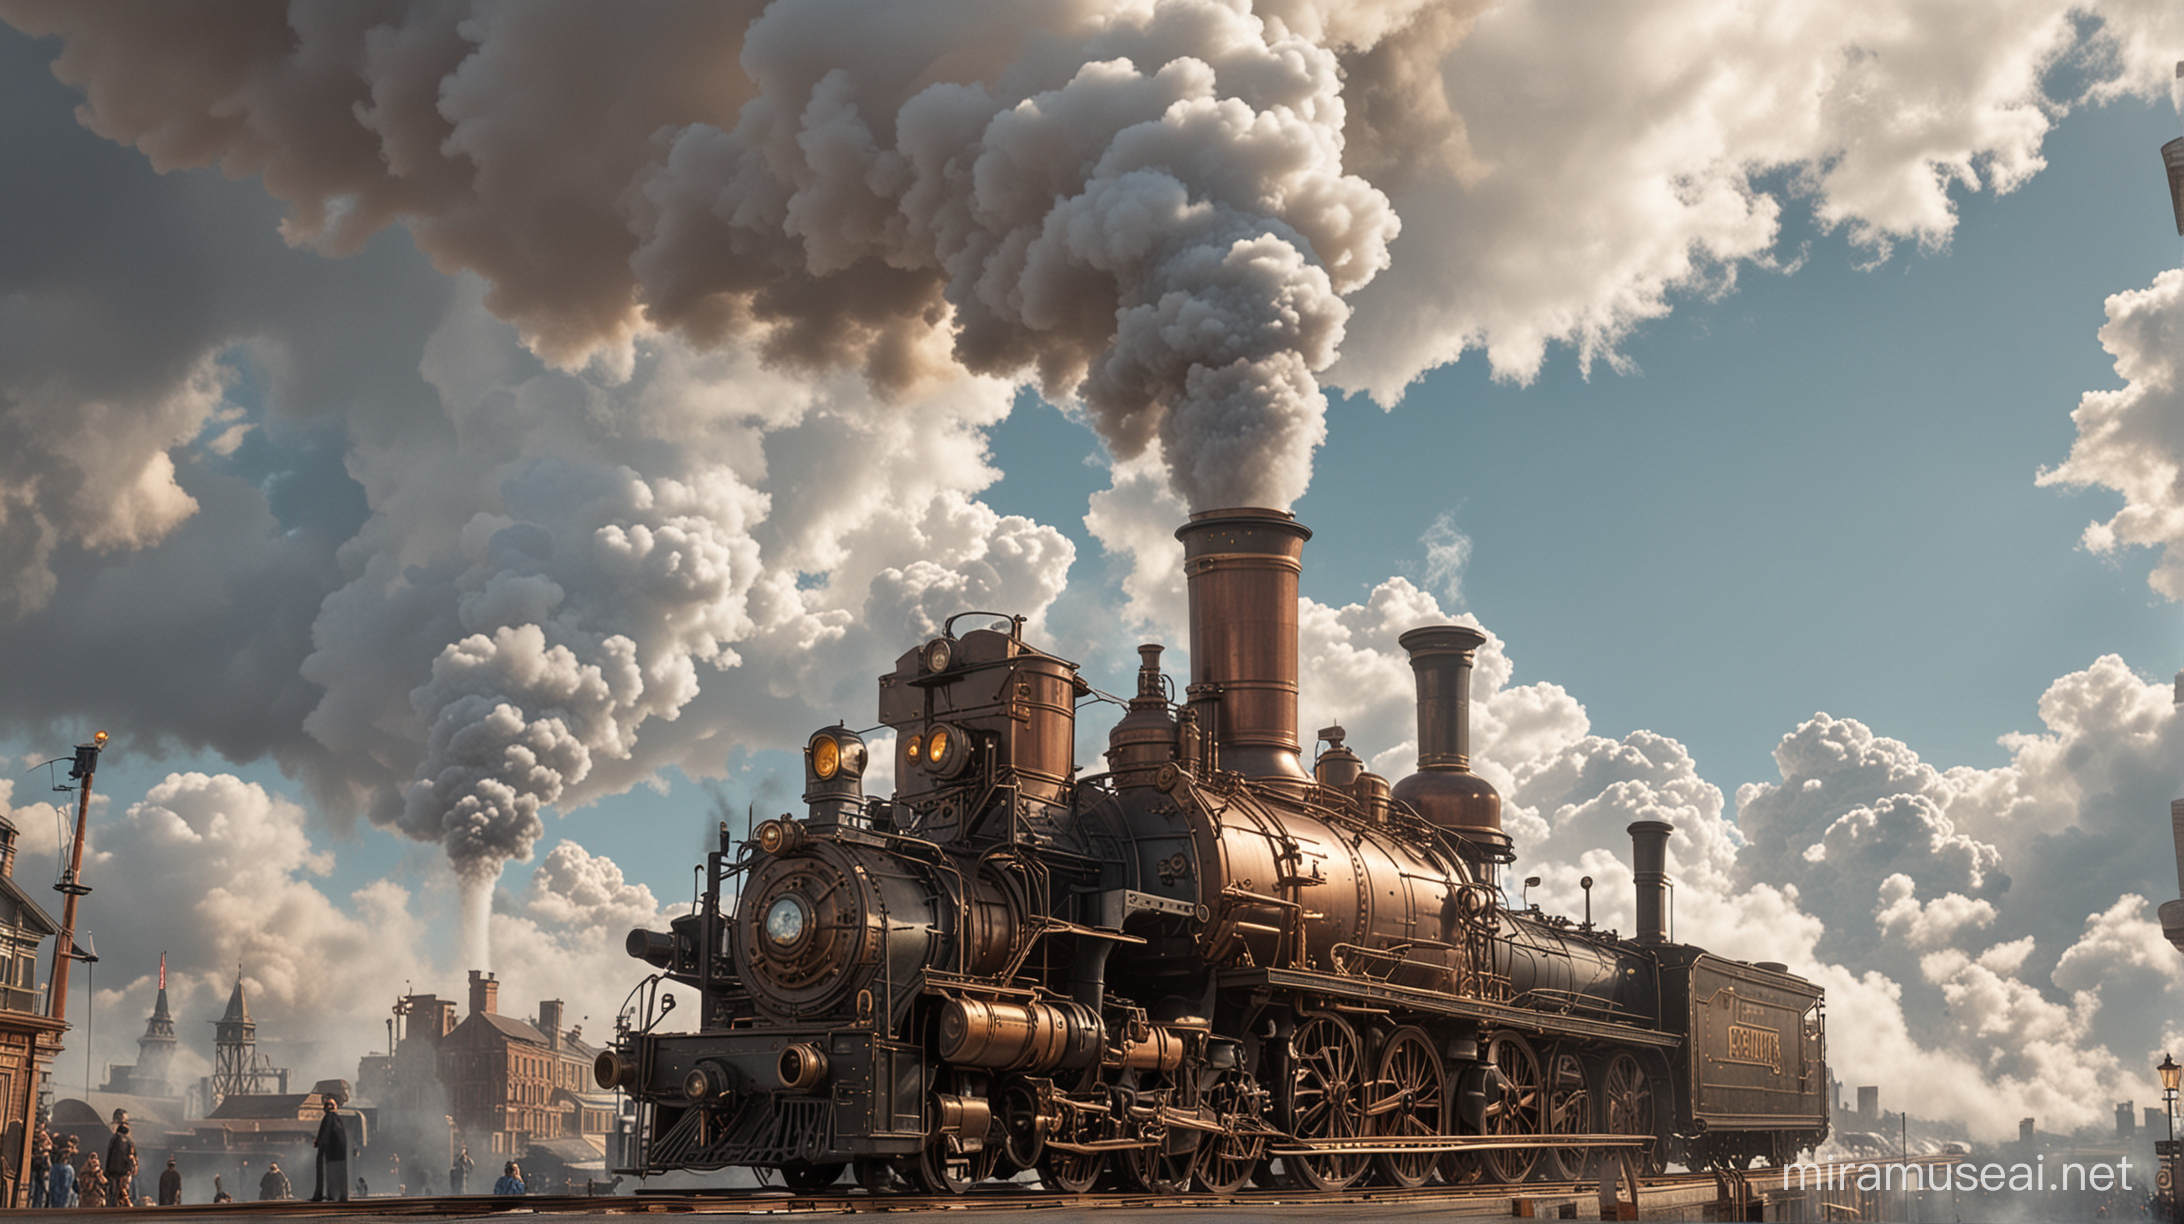 steamupunk city in clouds, large steam engines, steam, smoke, copper, gold, brass